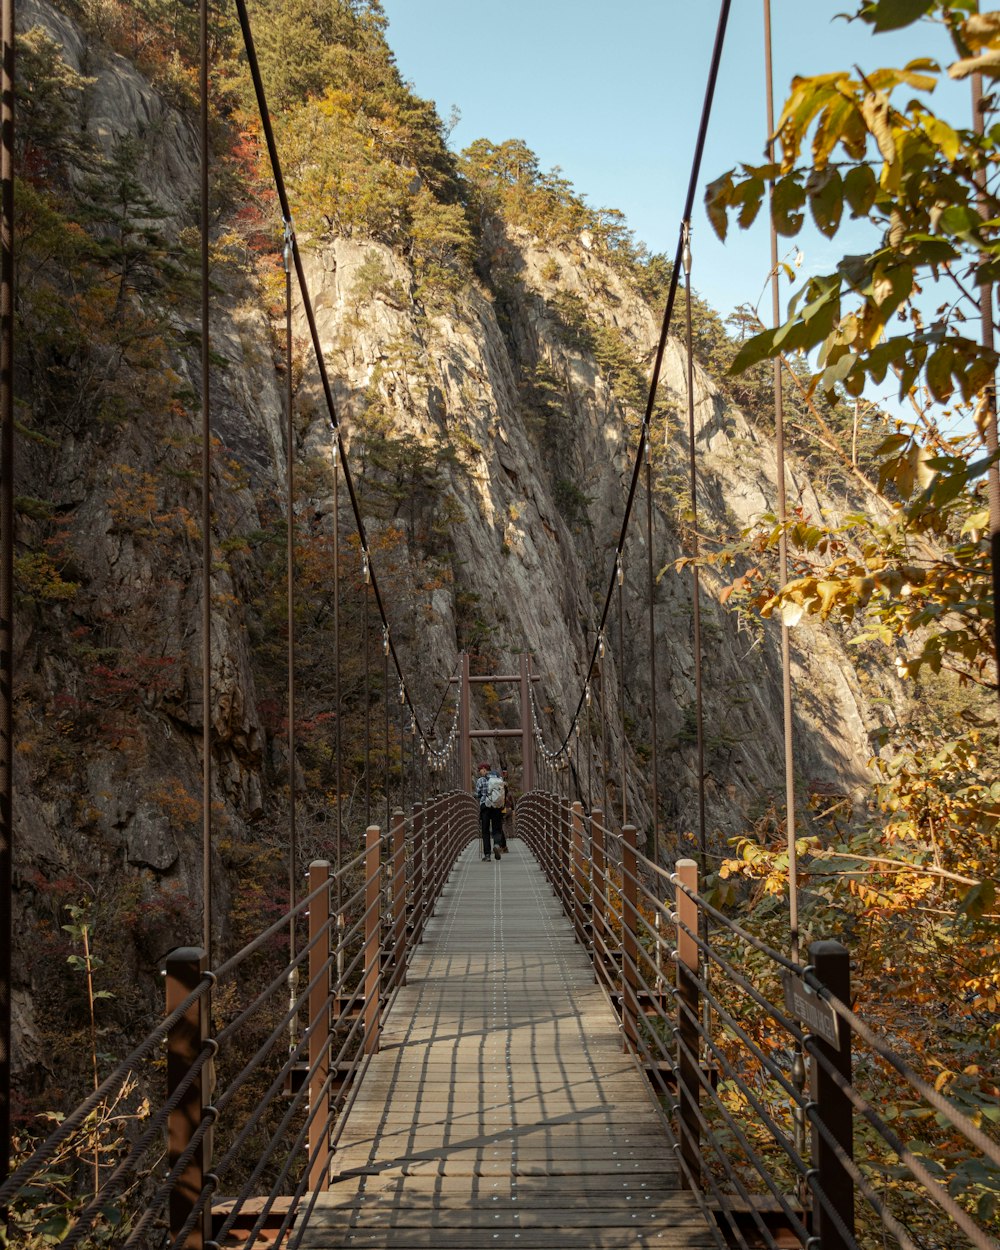 a person walking across a suspension bridge over a river